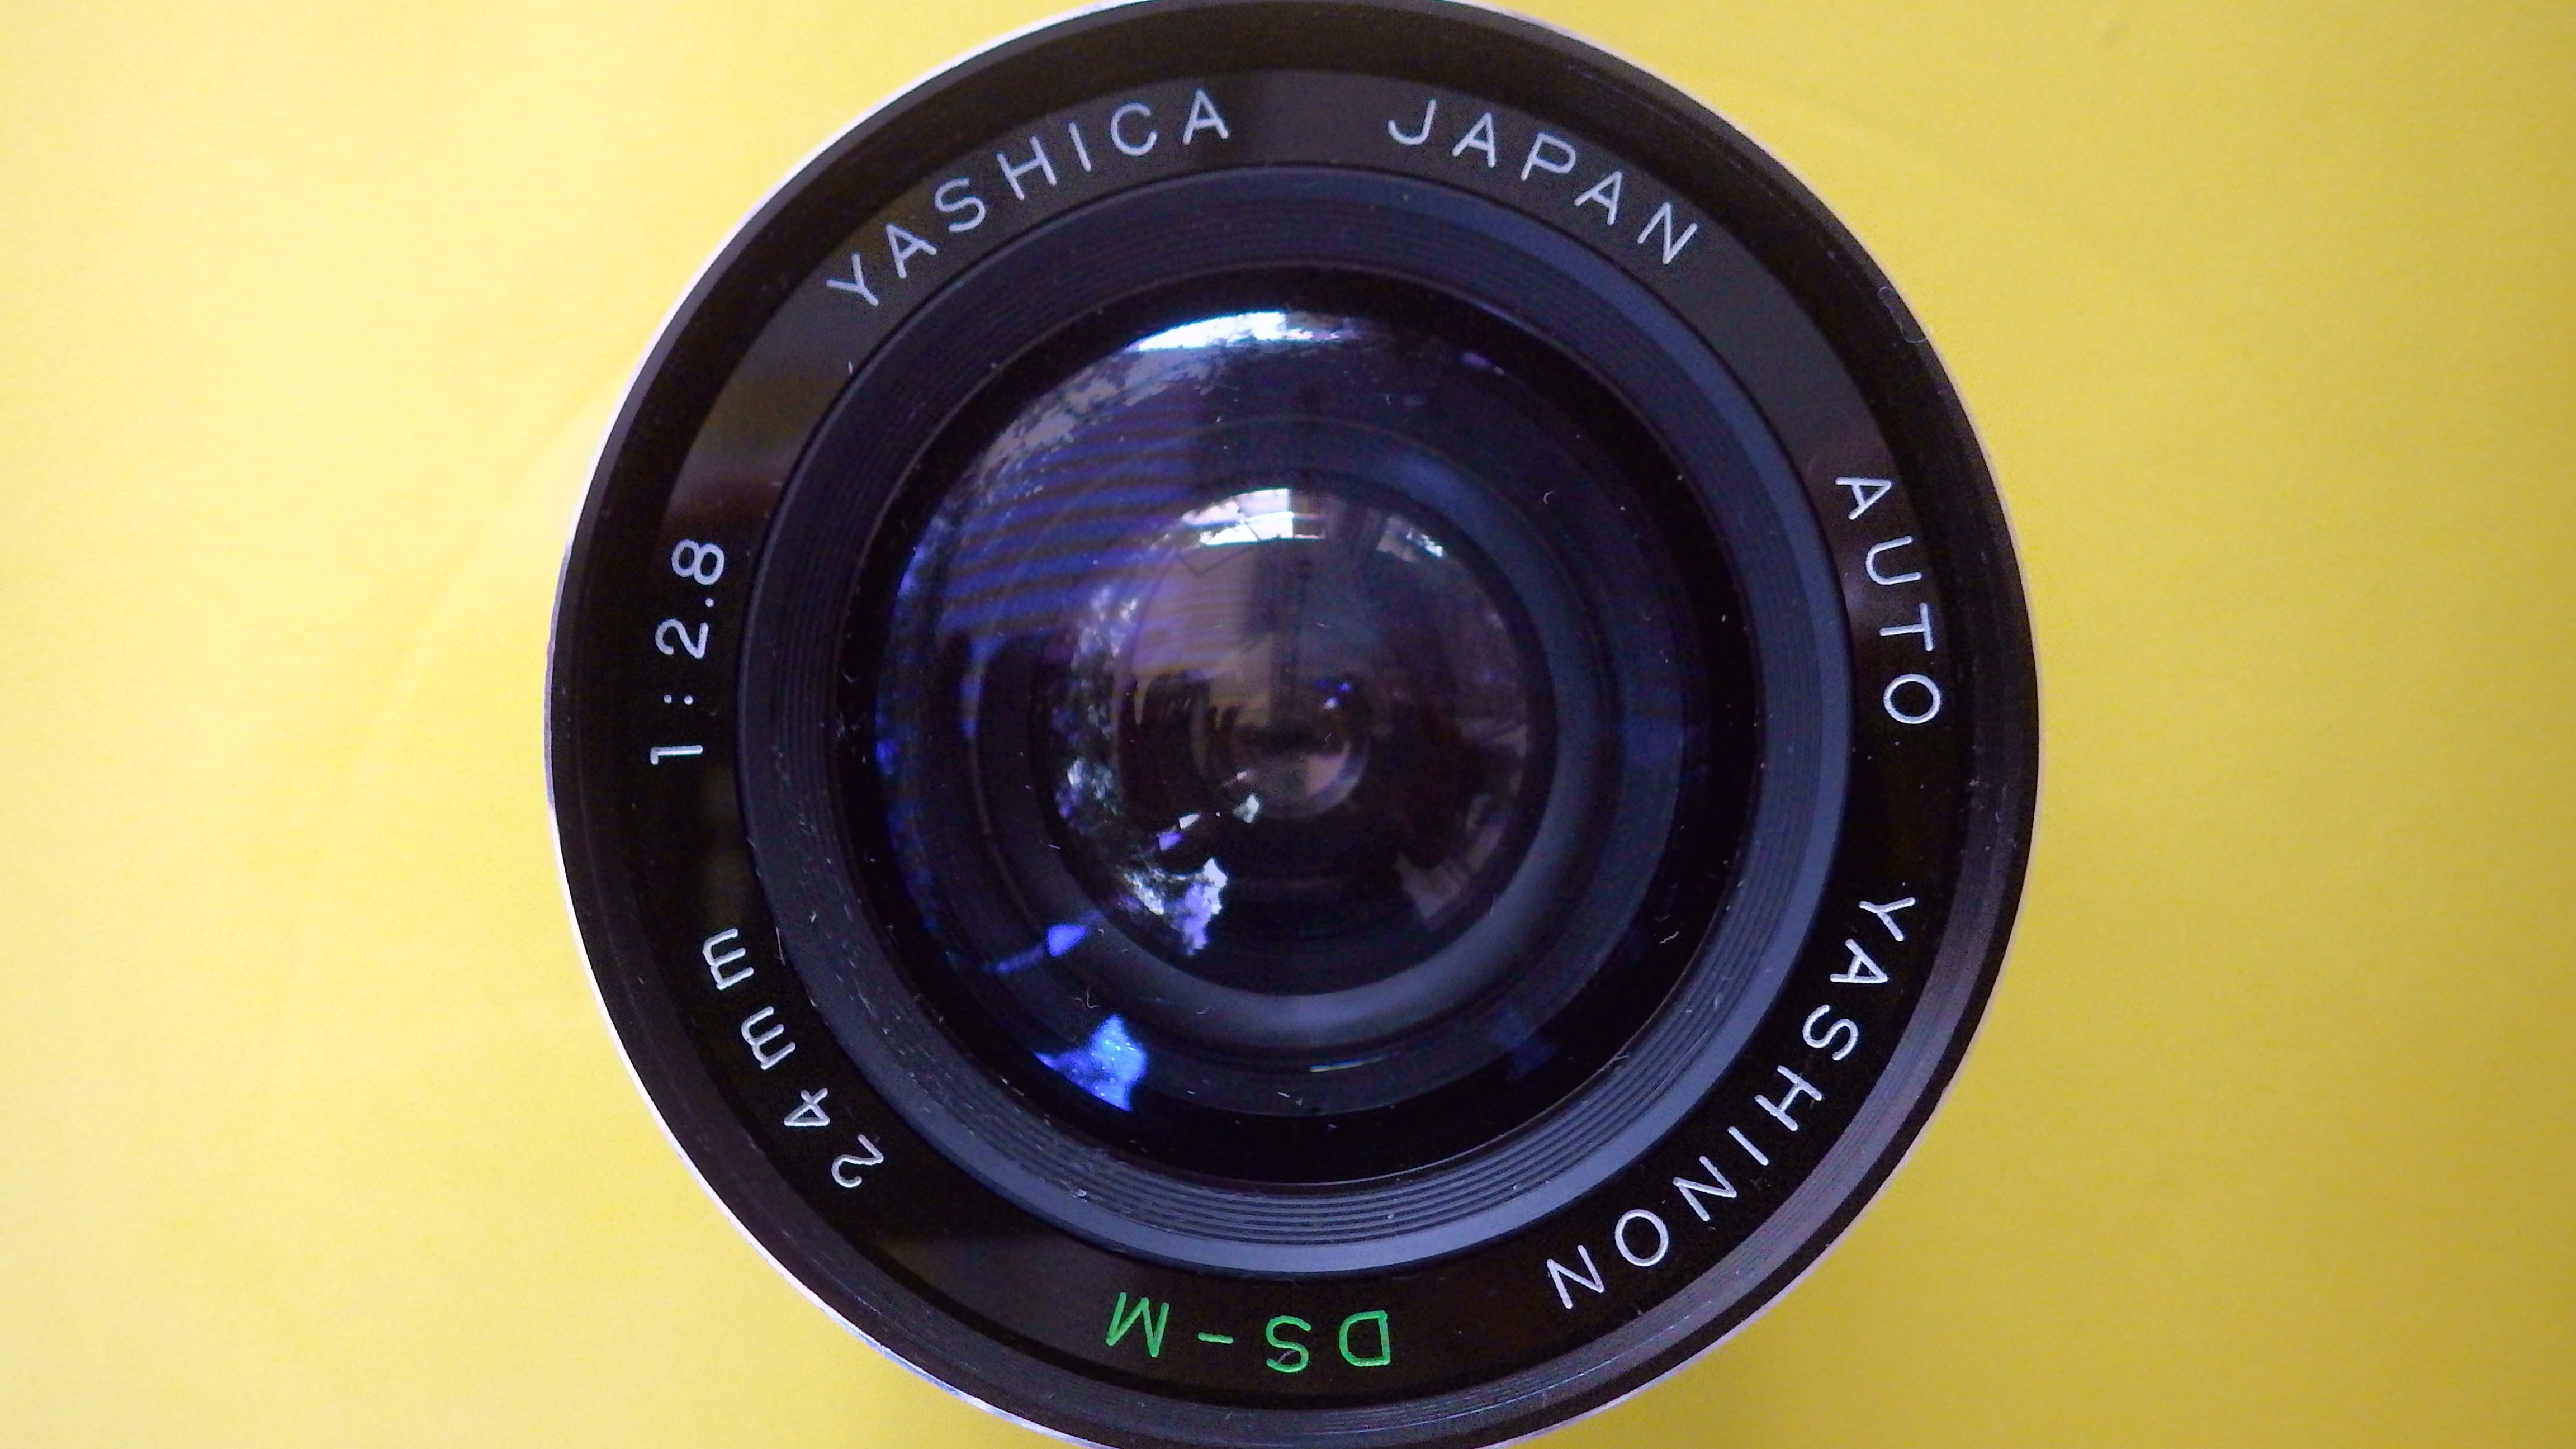 black yashica camera lens